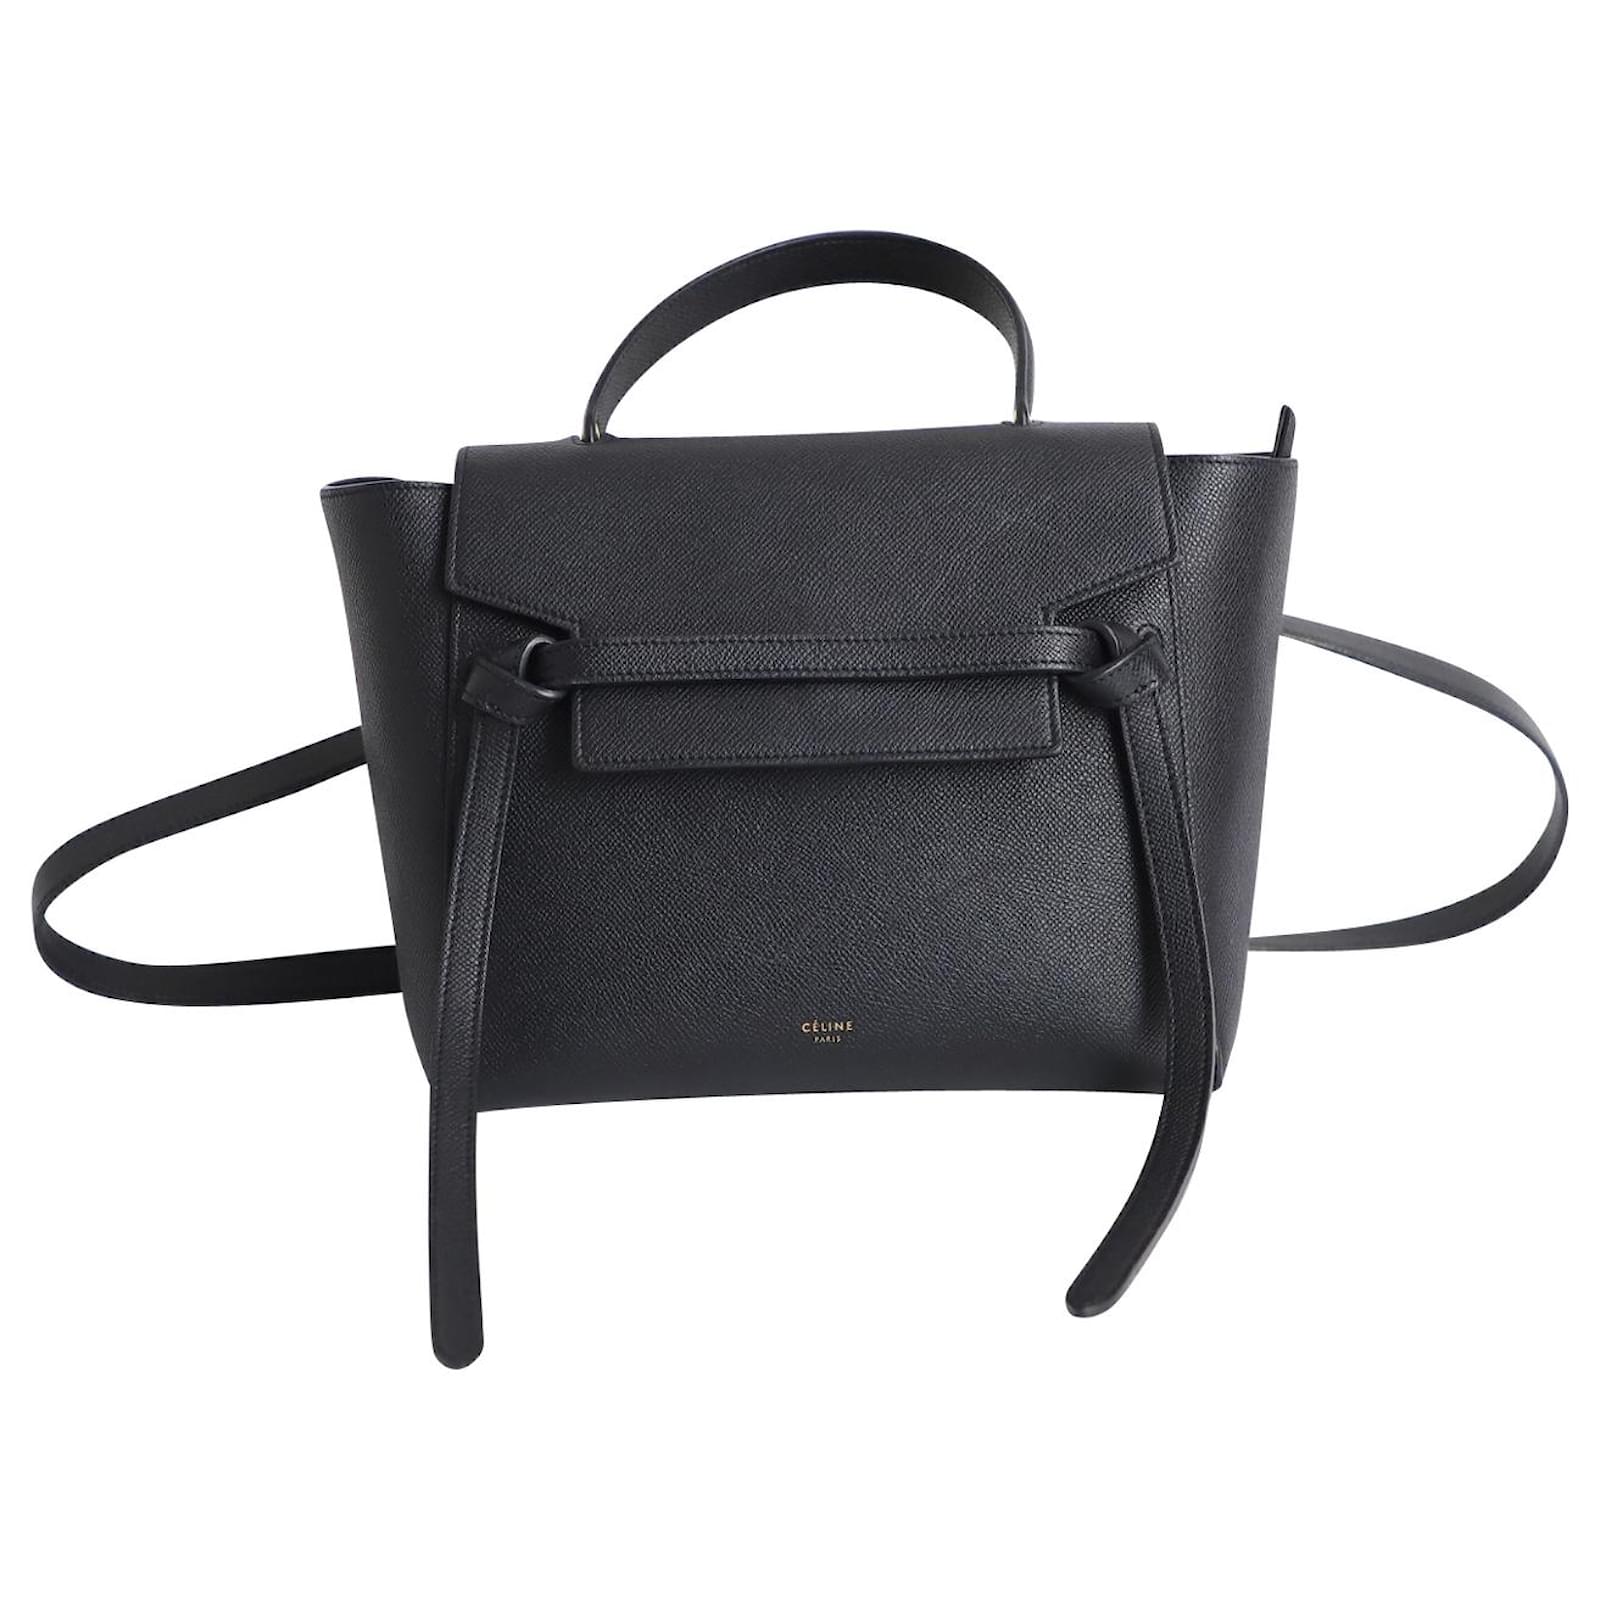 Celine Belt Nano Belt Bag in Grained Calfskin, Black